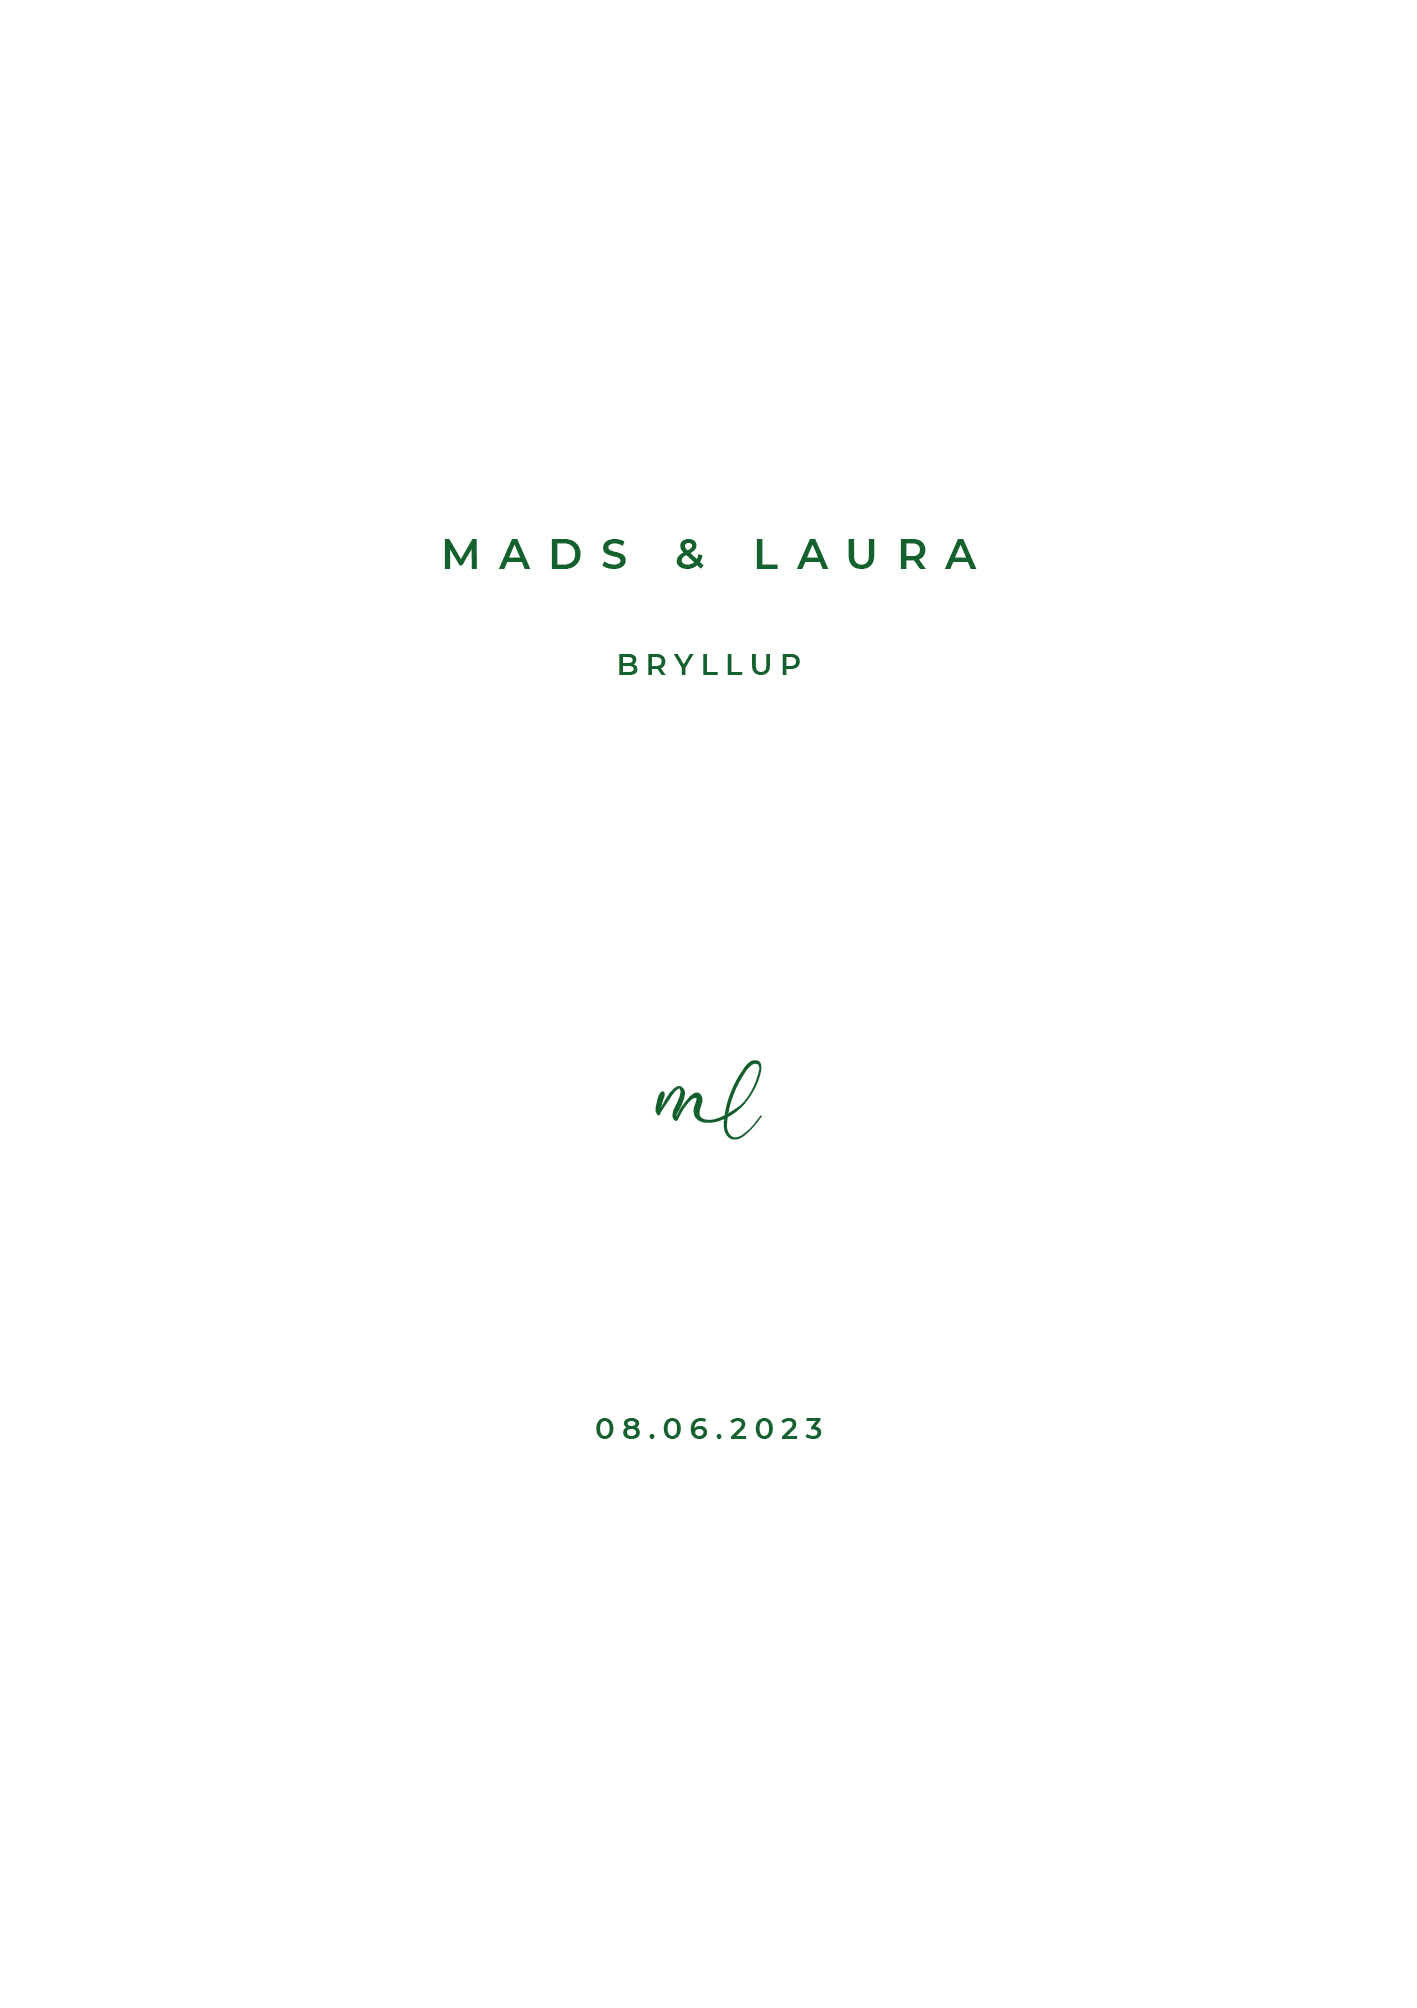 Invitationer - Mads & Laura Bryllupsinvitation